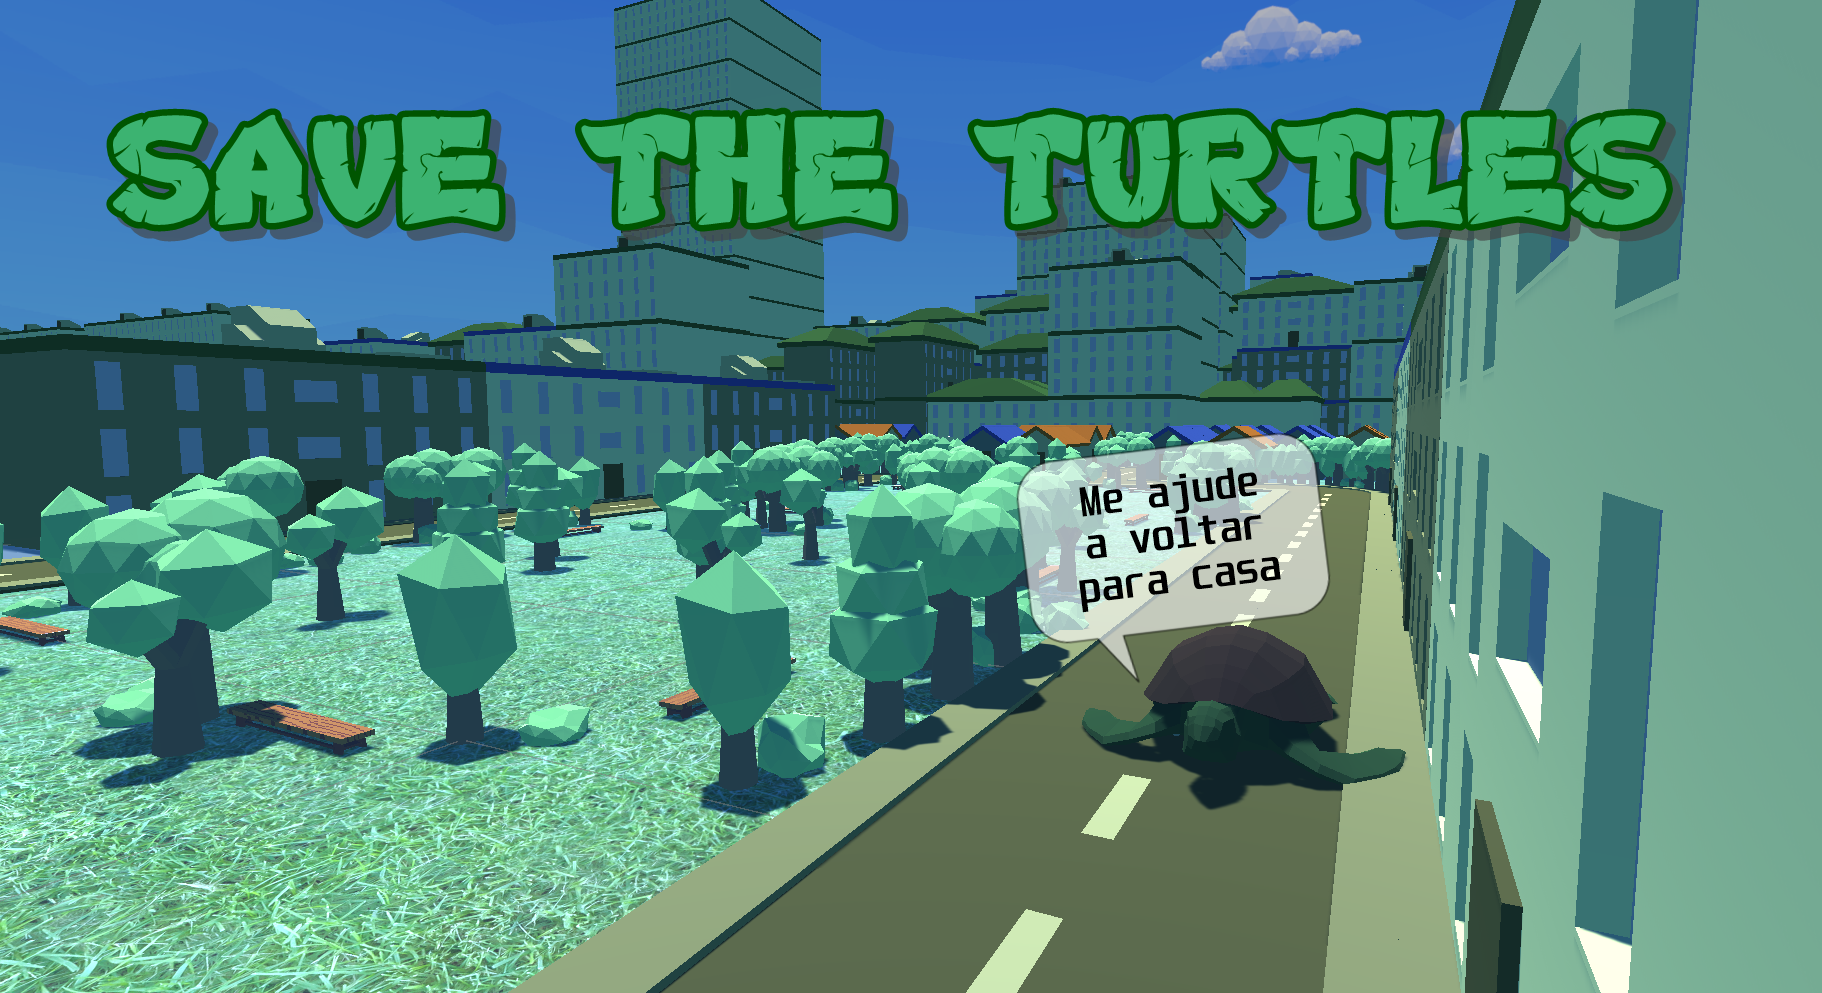 Save The Turtes